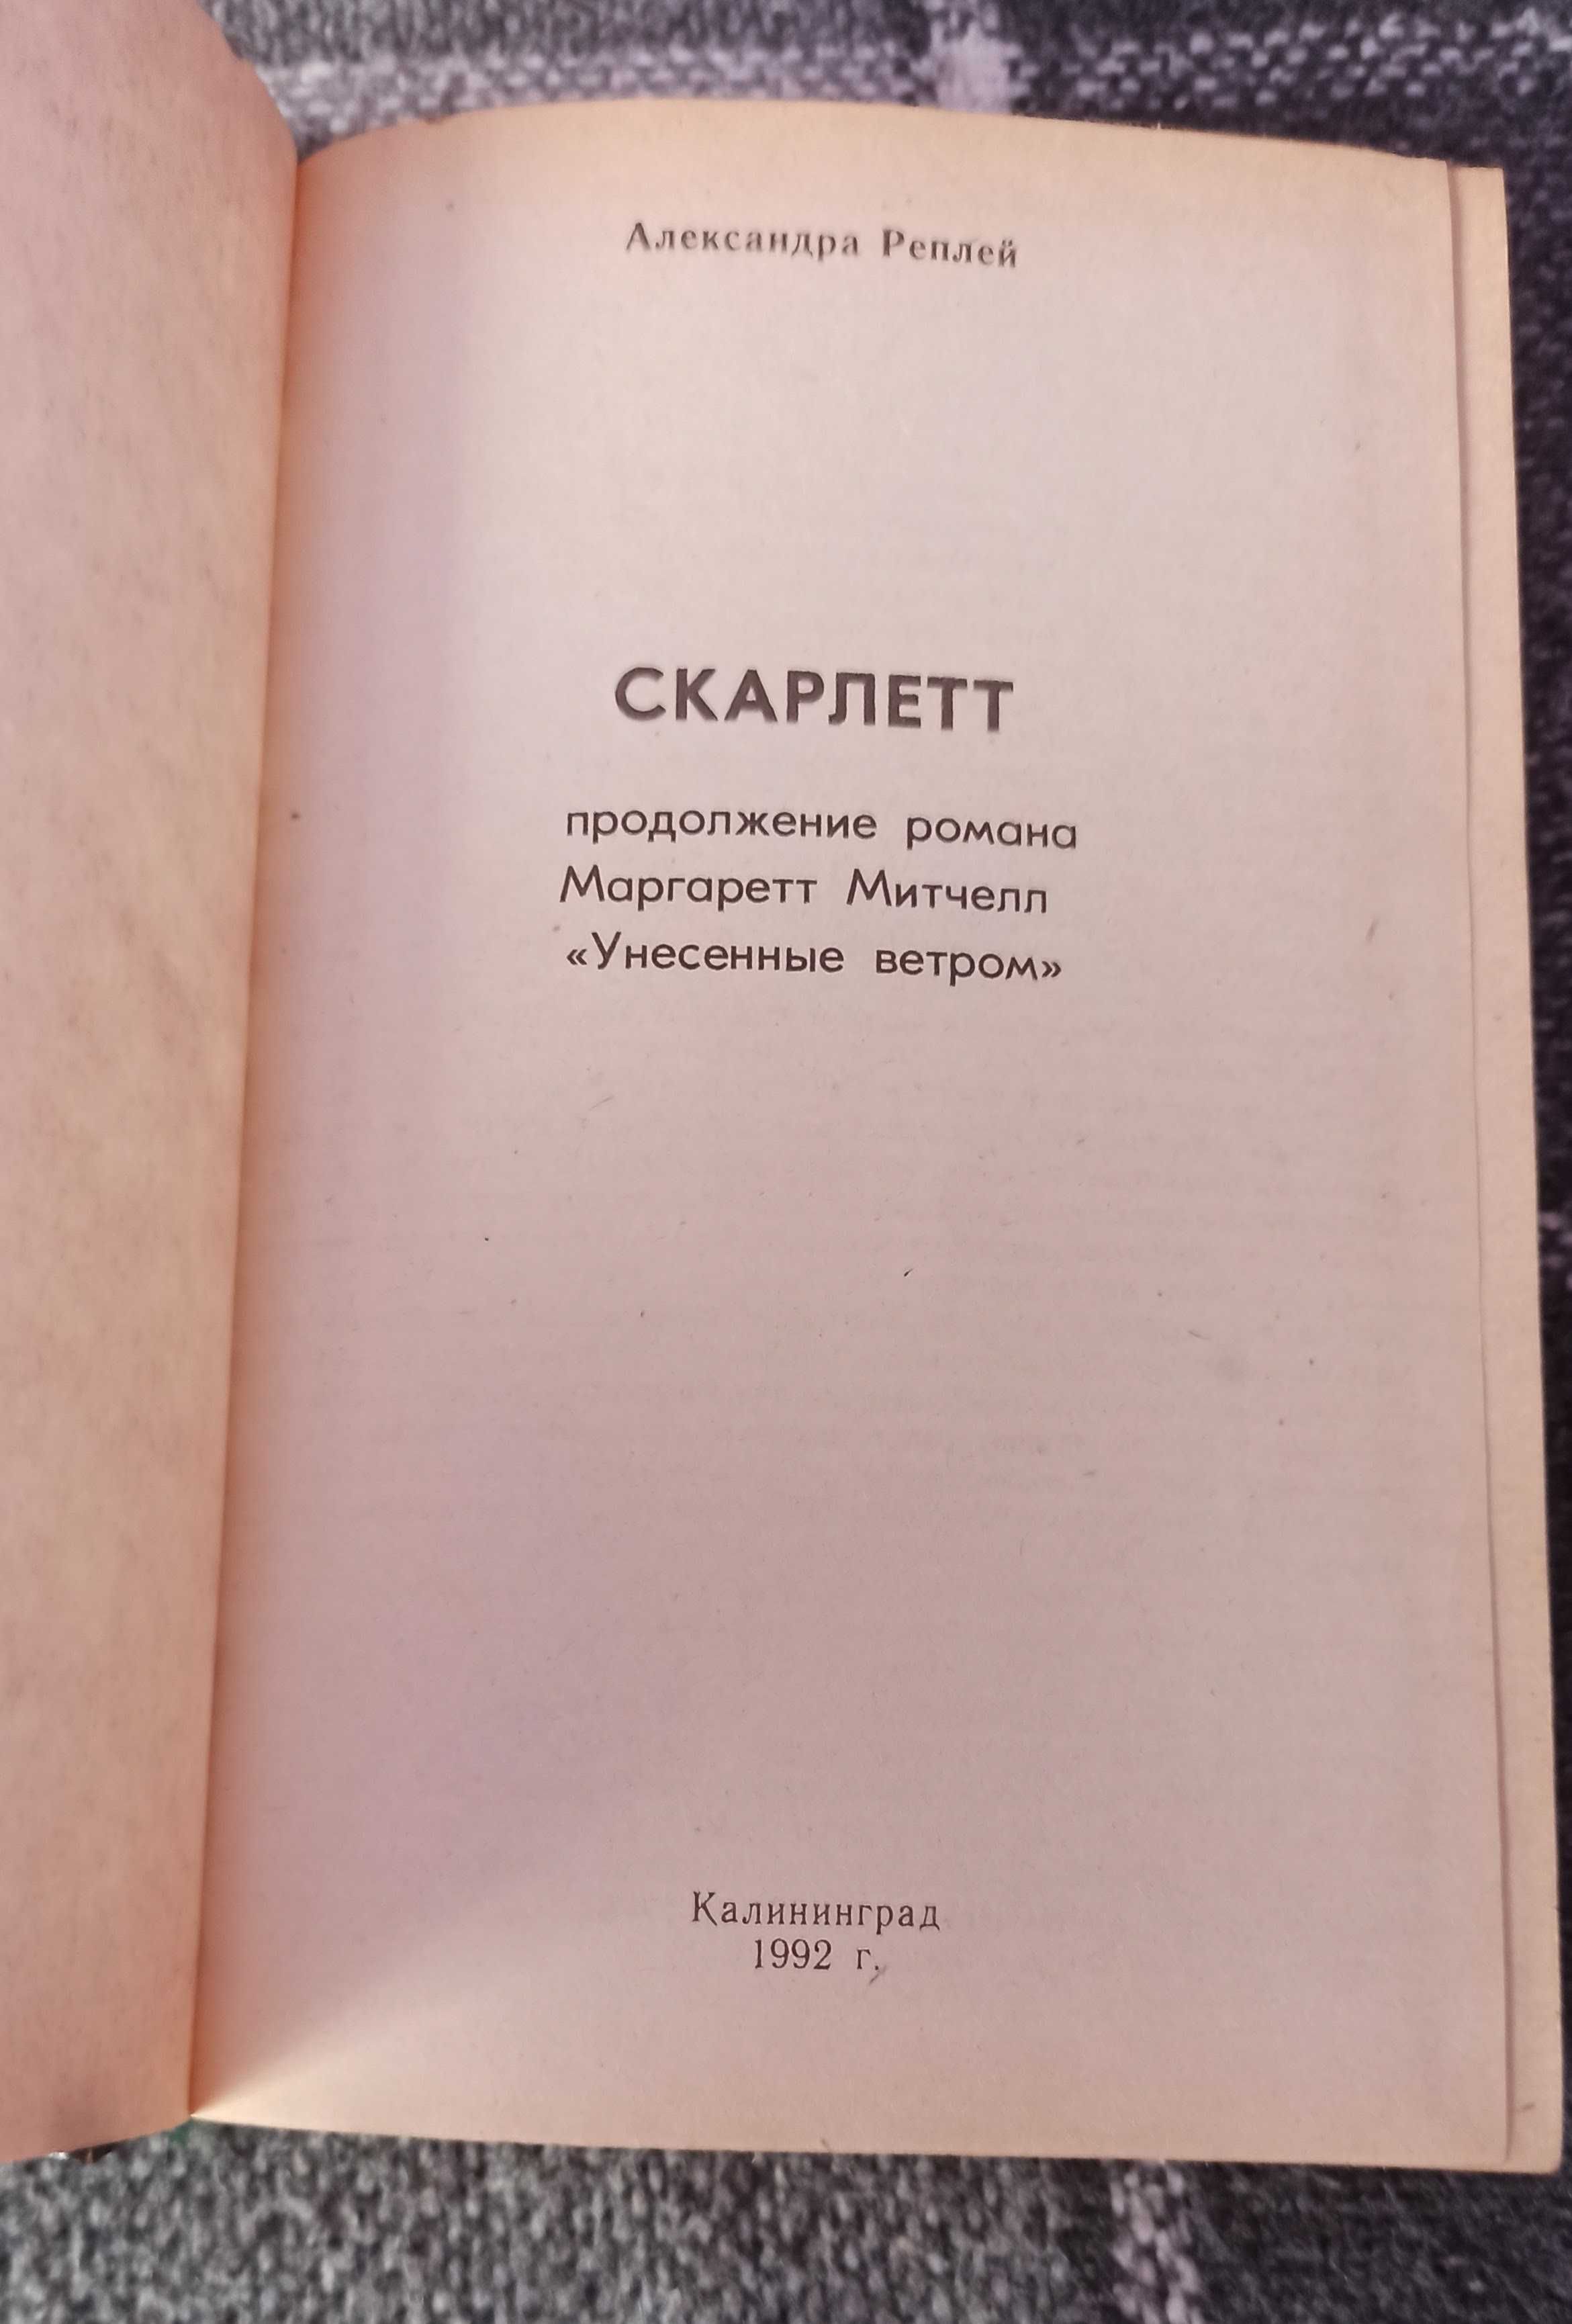 Книга Александра Ріплей "Скарлетт"